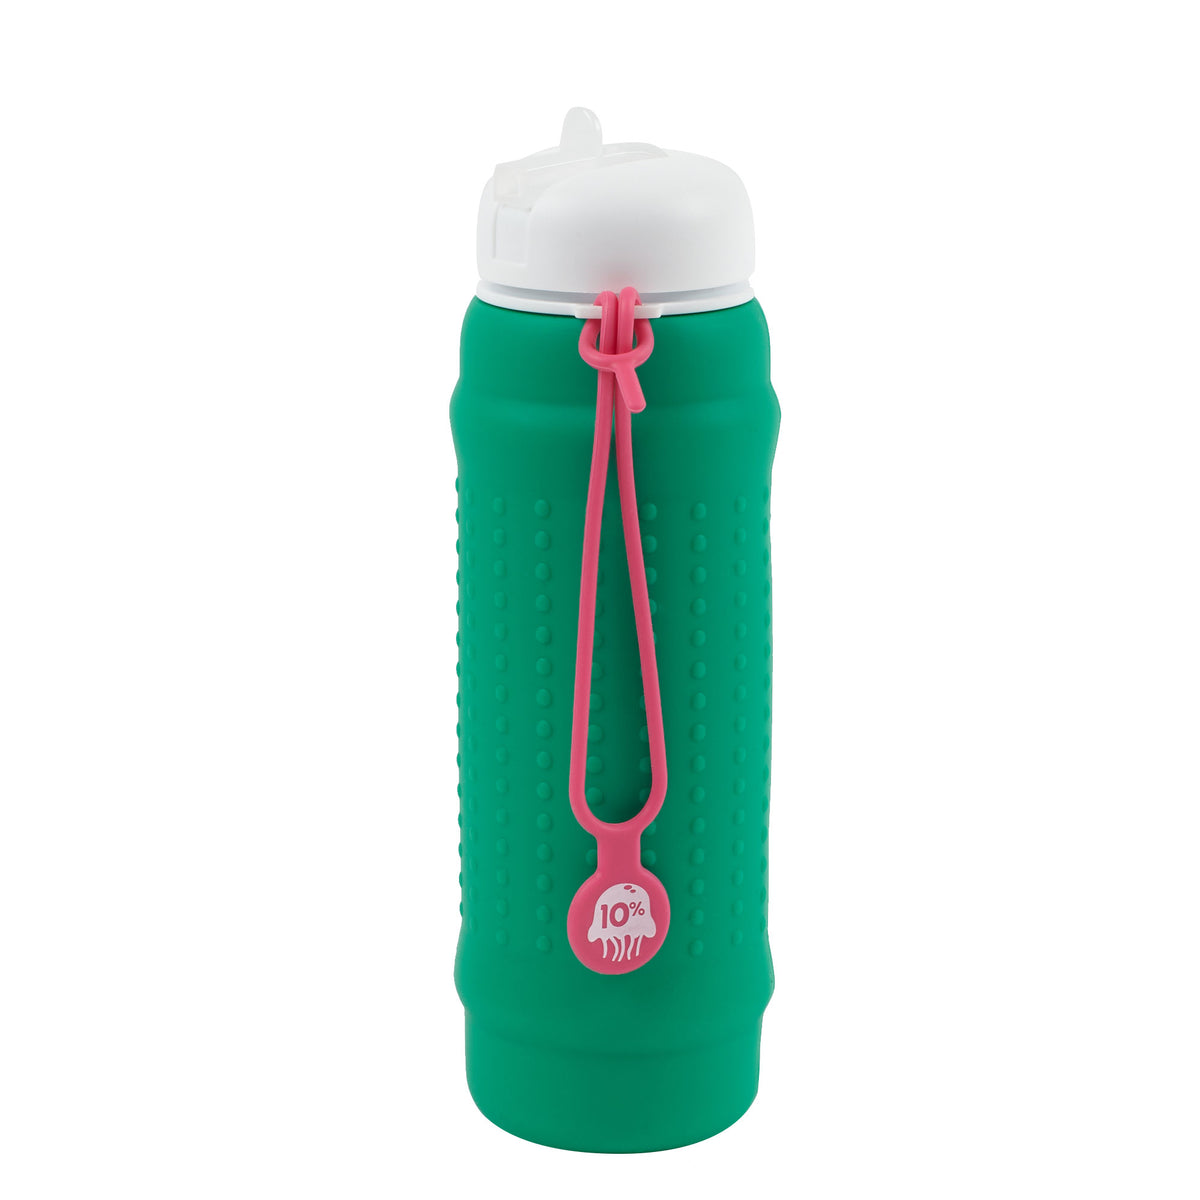 Rolla Bottle - Green, White Lid + Pink Strap